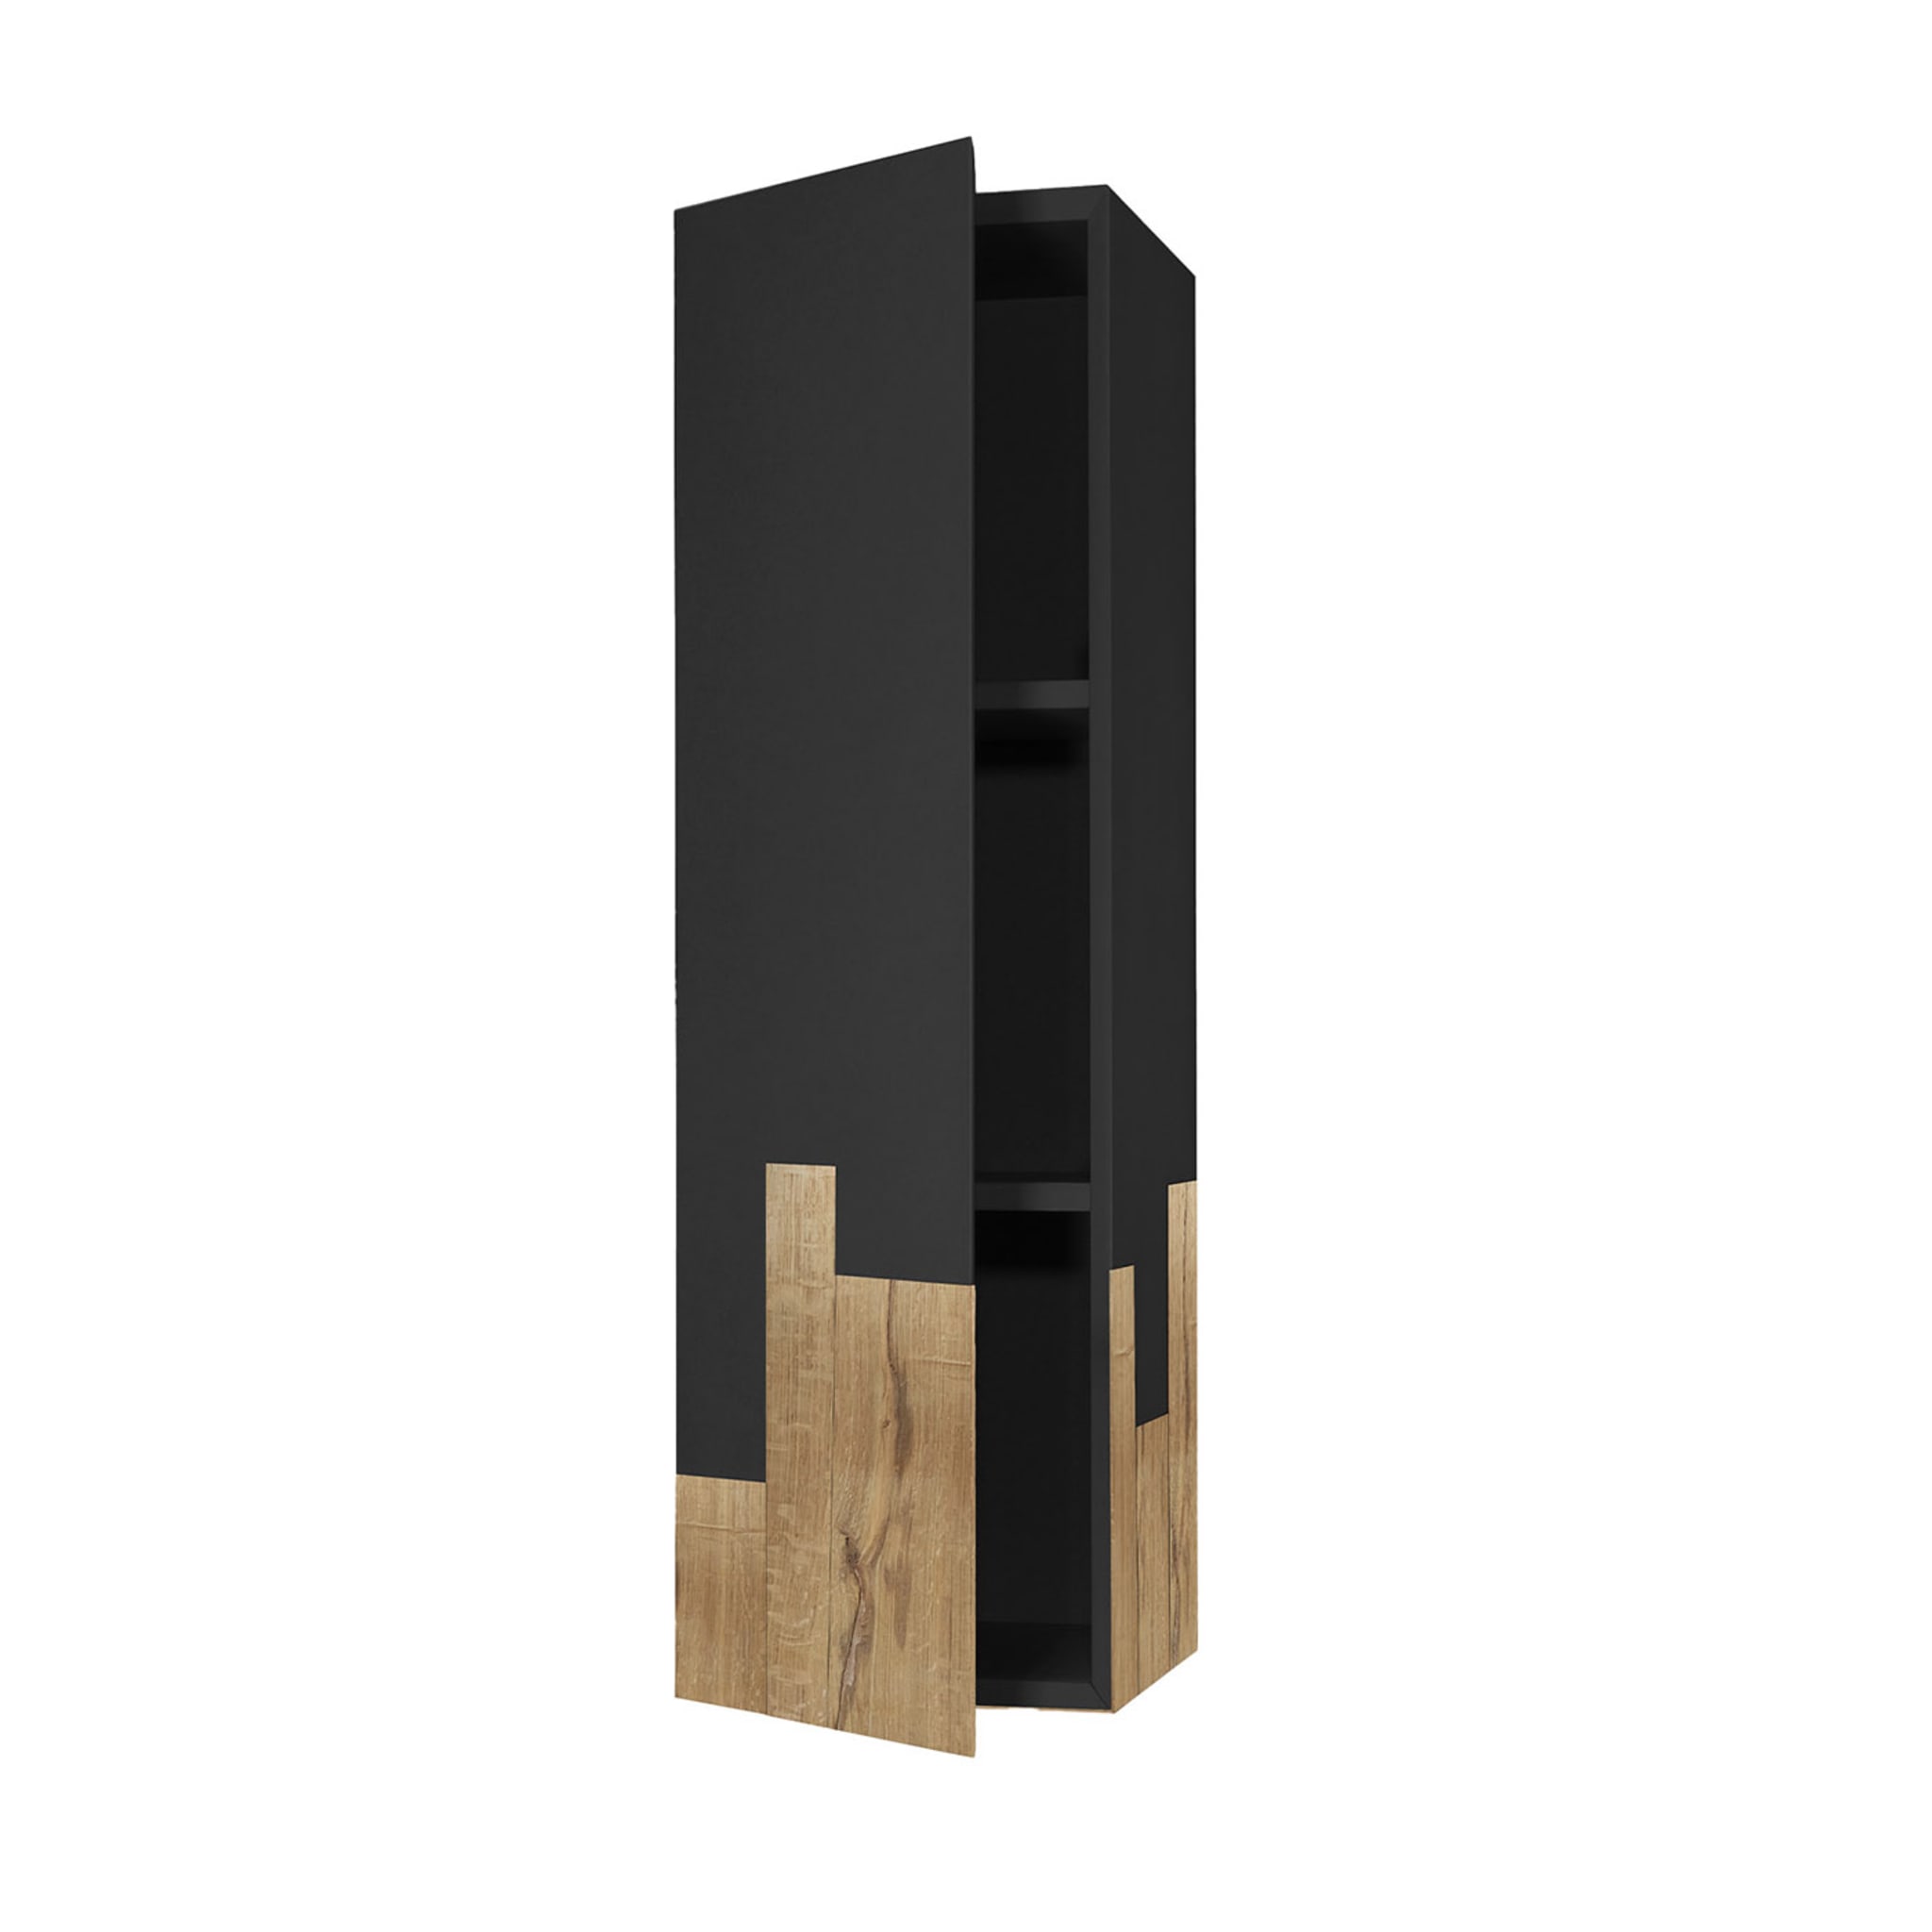 Armoire Fiammifero verticale suspendue noire par Giulia Contaldo - Vue principale